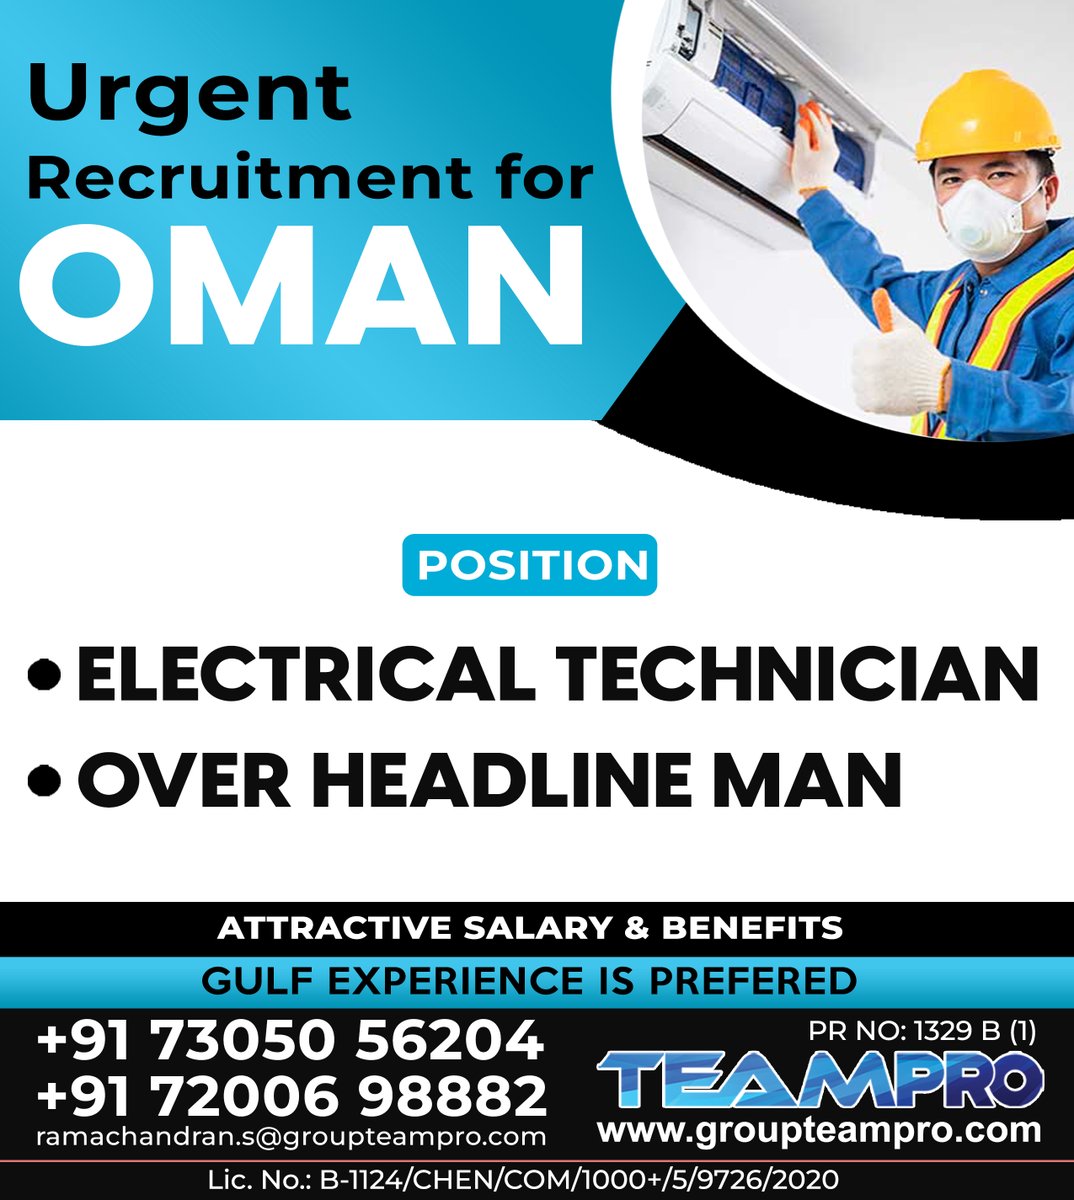 #oman #omanjobseekers #freerecruitment #electricaltechnician #overheadlineman #gulfexperience #immediatejoiners #shortlistingunerprogress